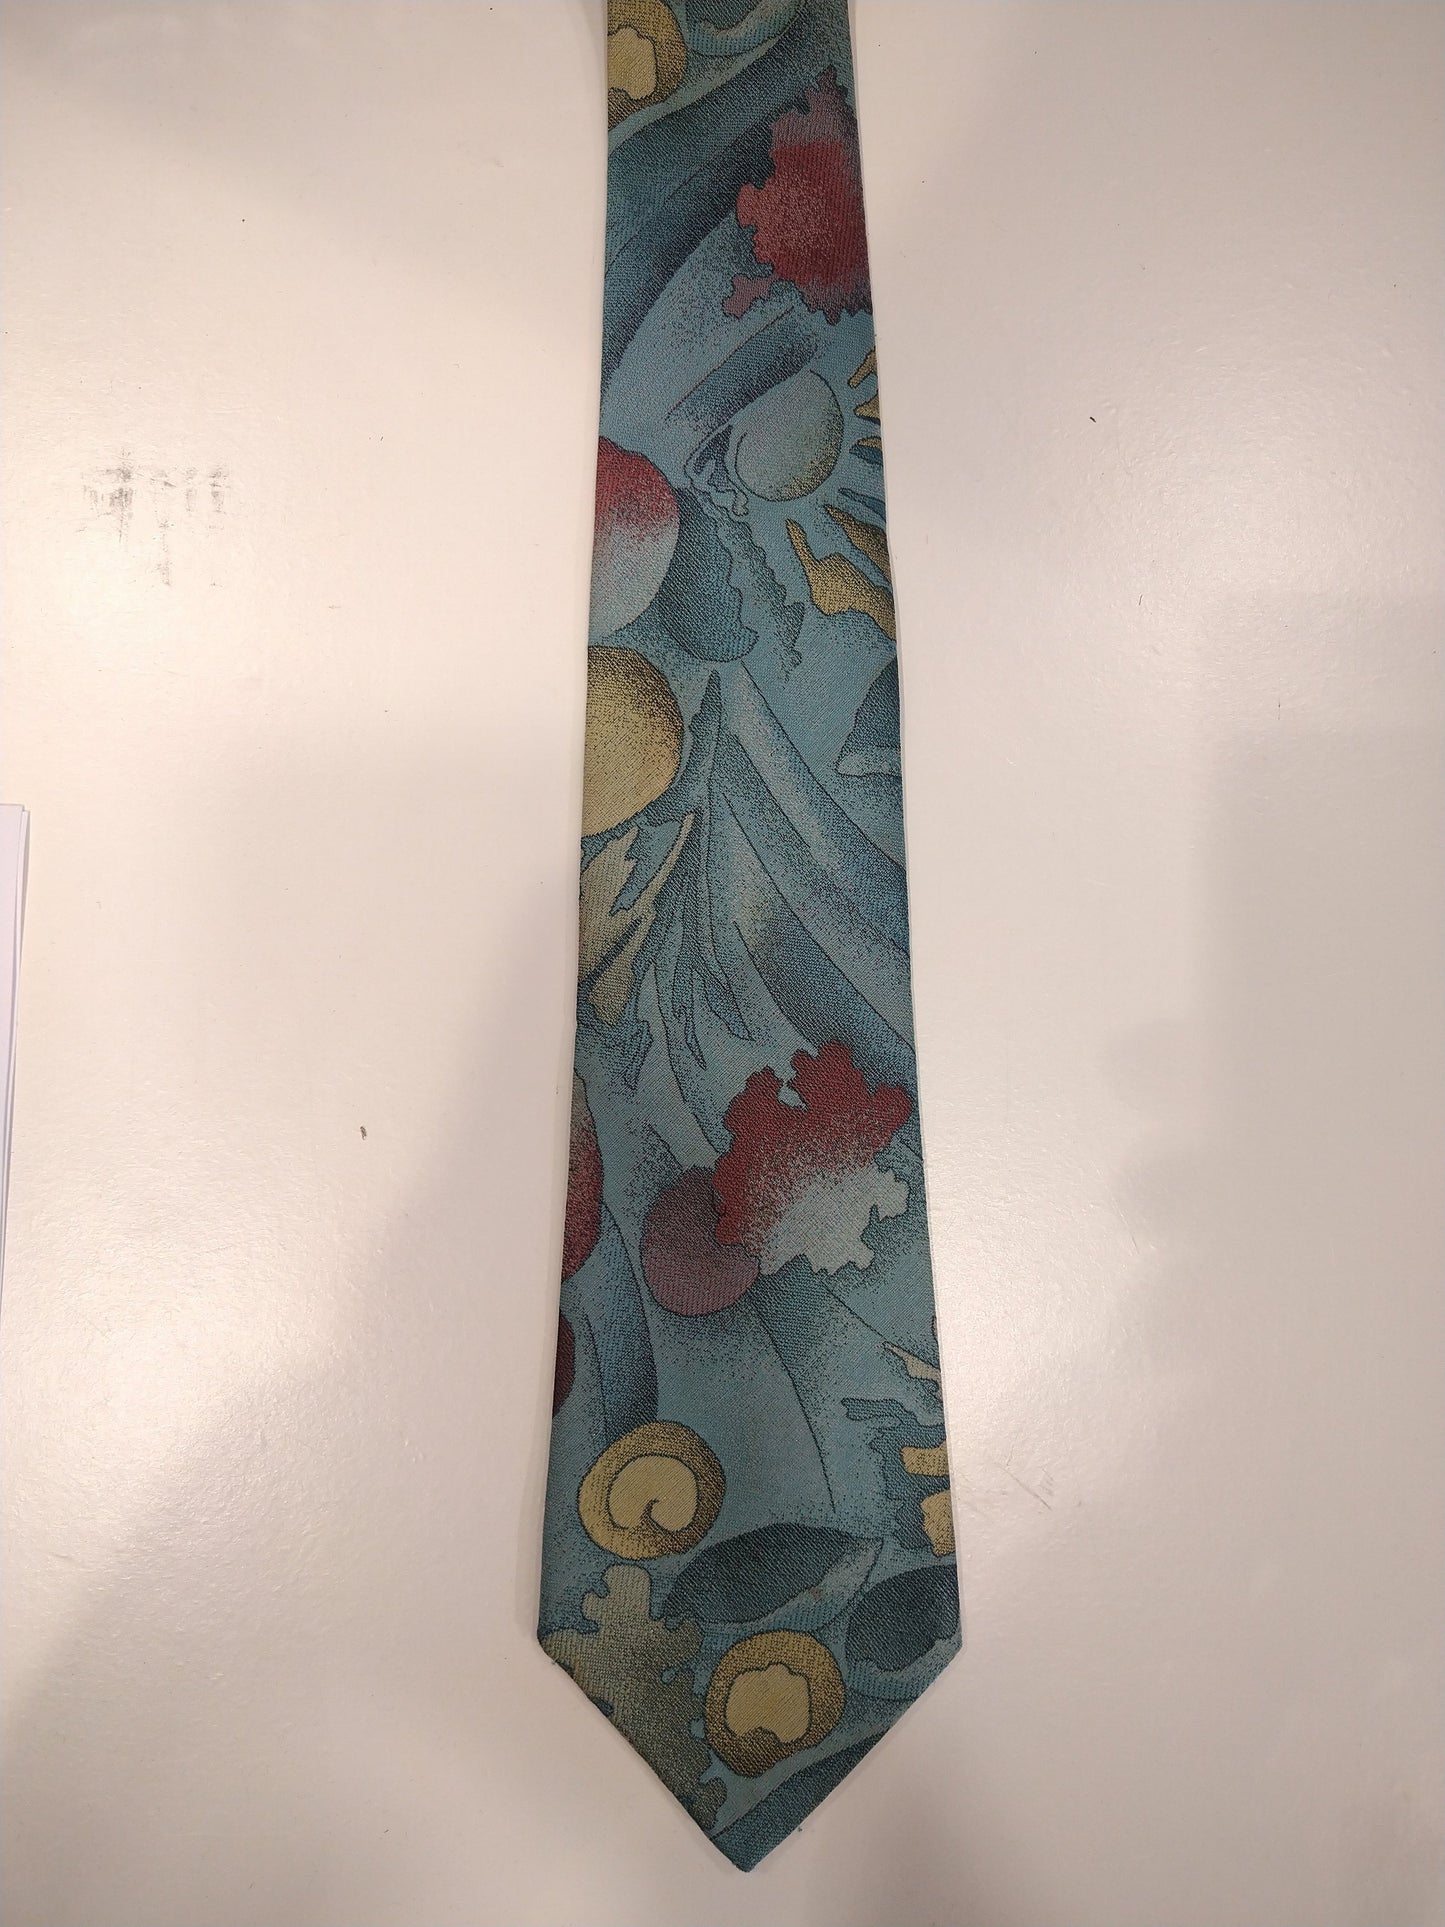 Vintage Michaelis Polyester tie. Nice vintage motif.